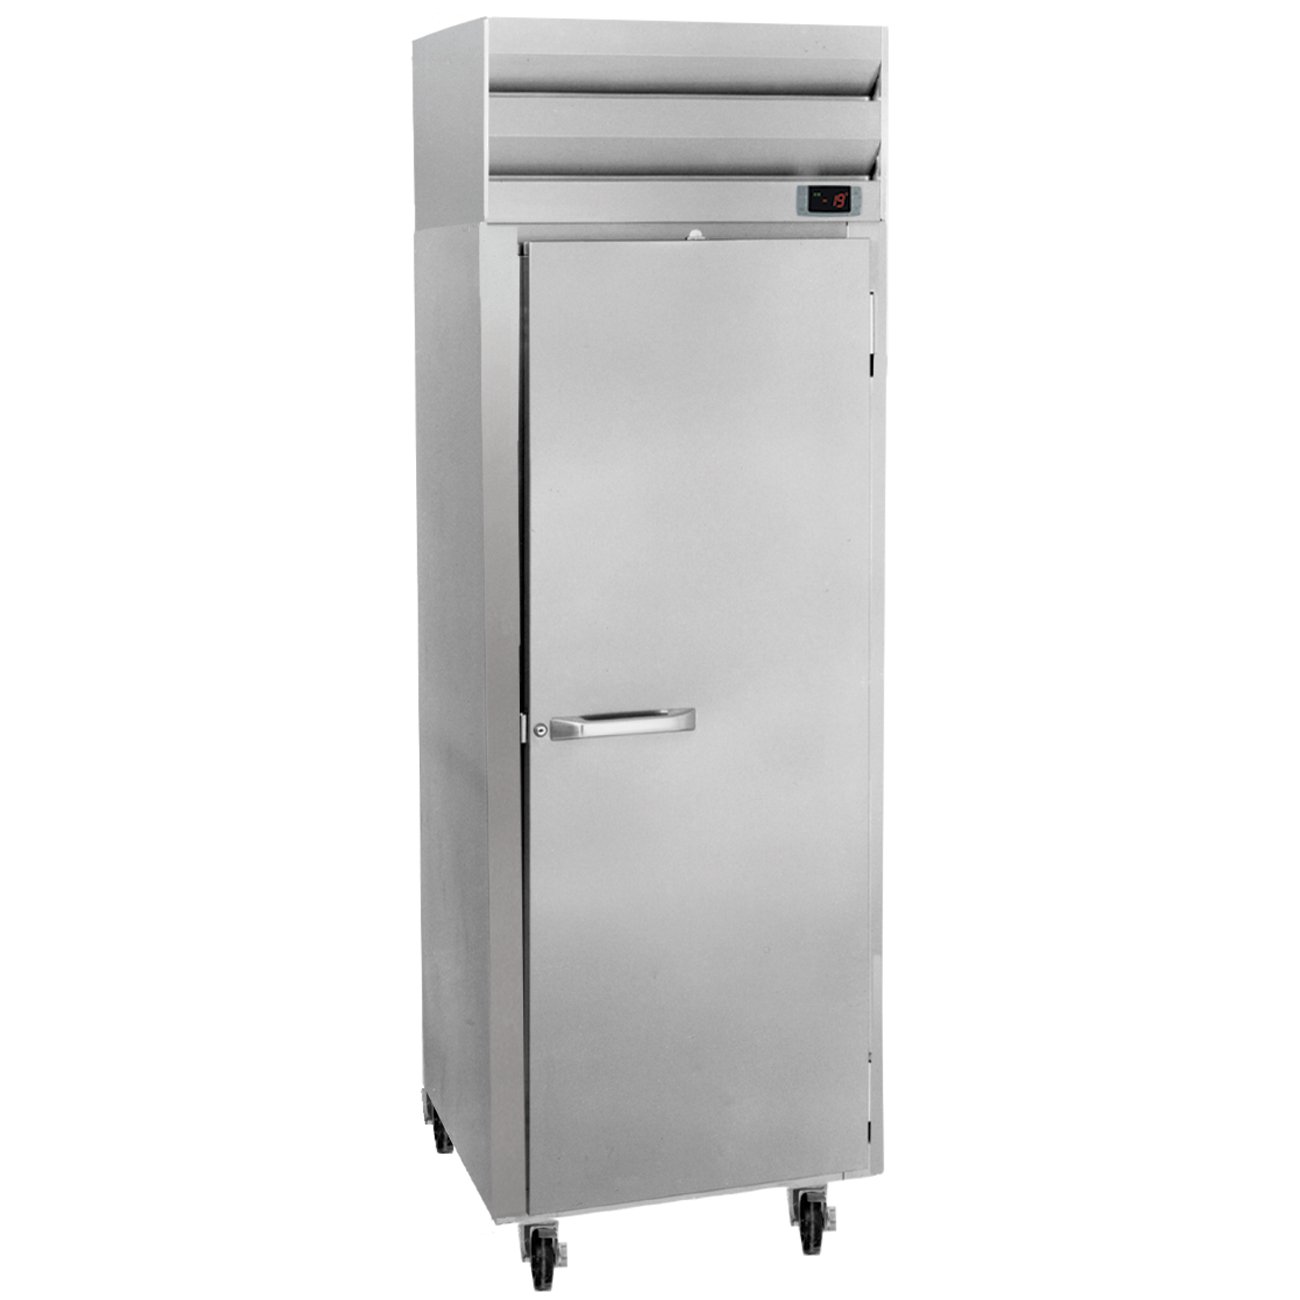 Howard-McCray SR22/P 26“ 1-Section Reach-In Refrigerator w/ Solid Door, 22 cu. ft.